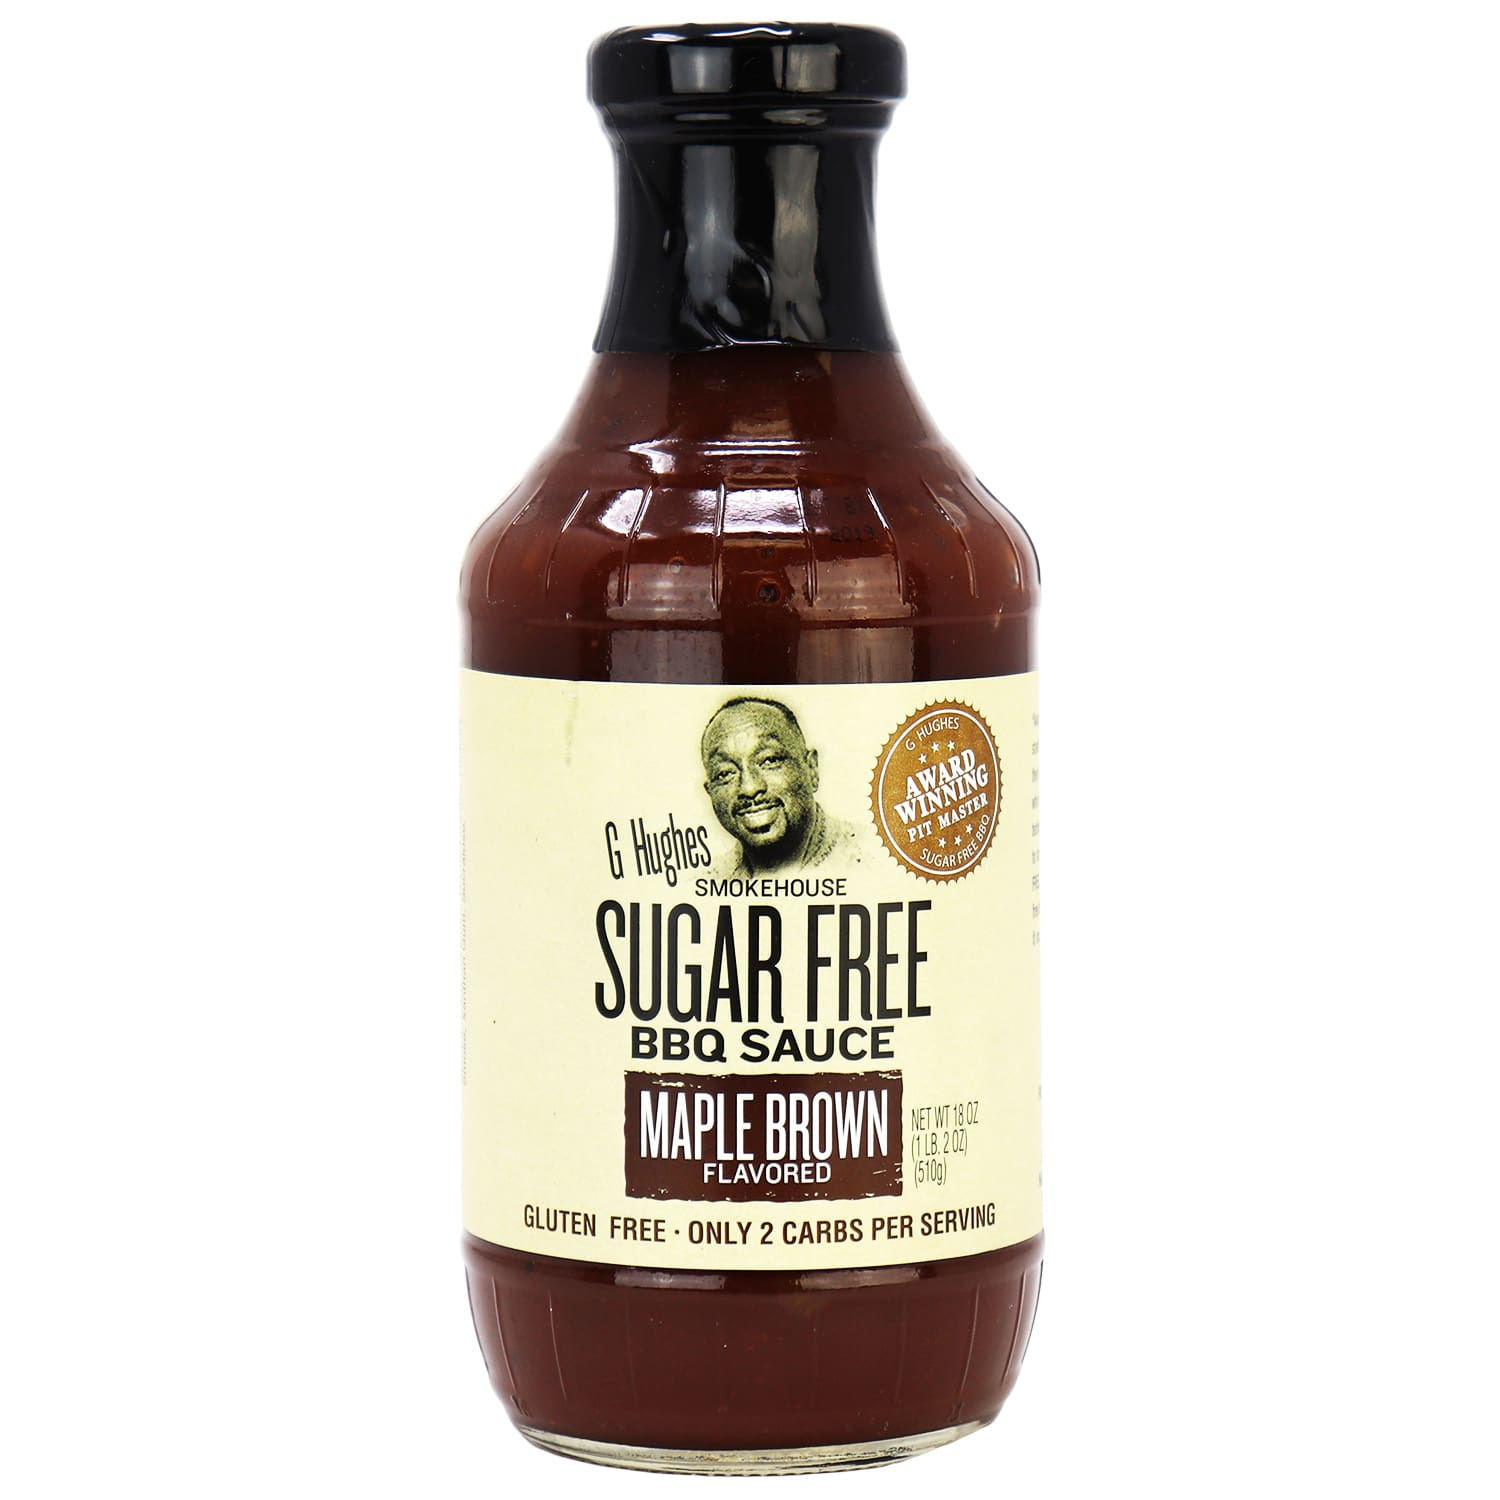 G Hughes Sugar Free BBQ Sauce Maple Brown Keto